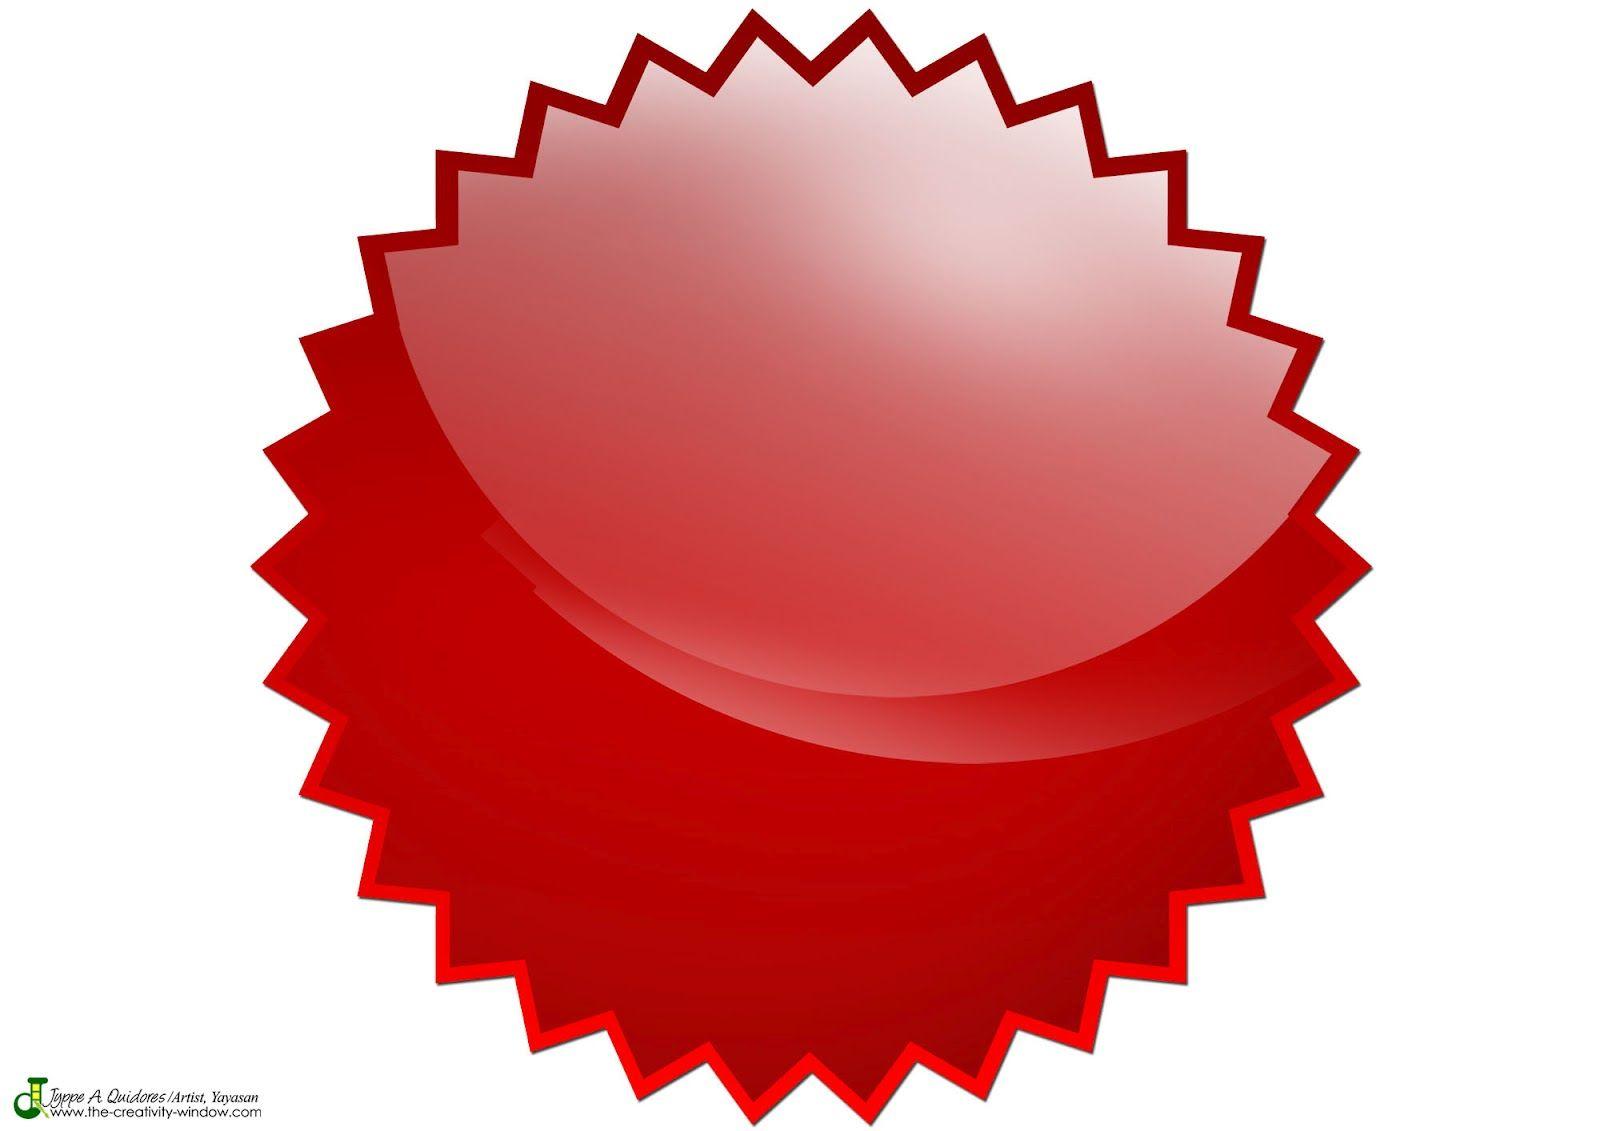 RedR in Circle Company Logo - Red Circle Company Logo #traffic Club